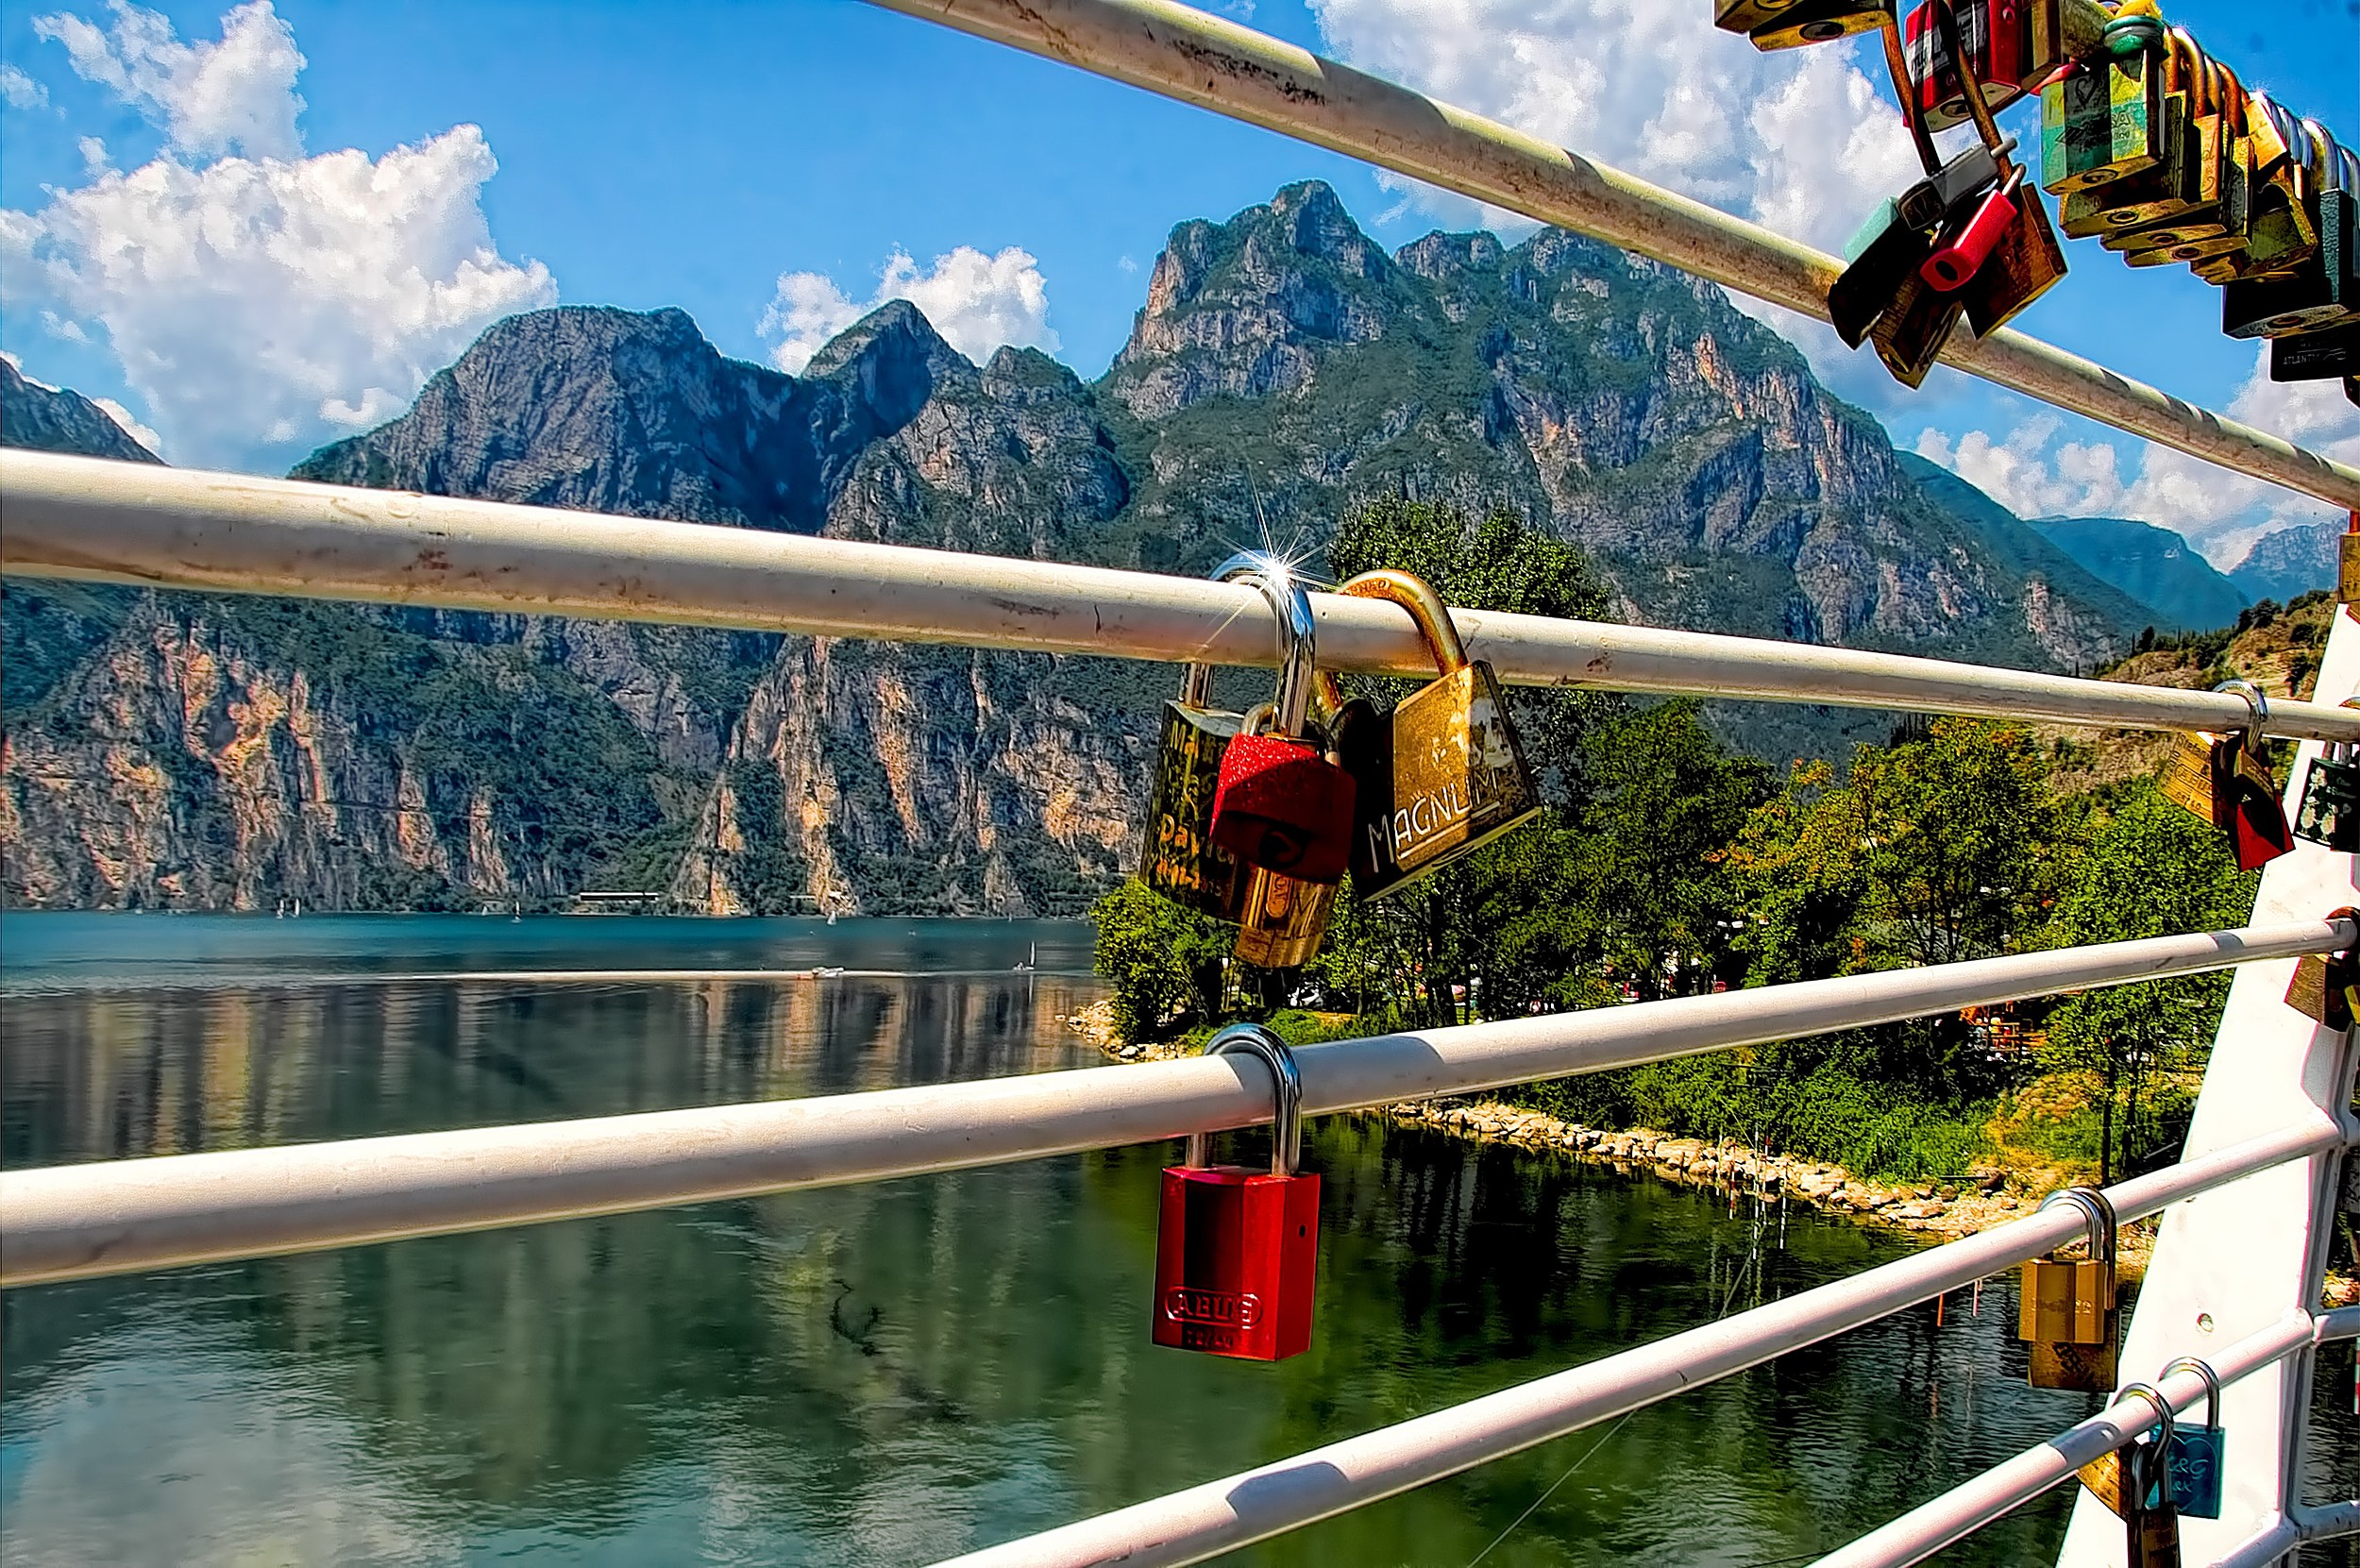 Idaho Love Locks: Why Are There So Many Locks On This Fence?